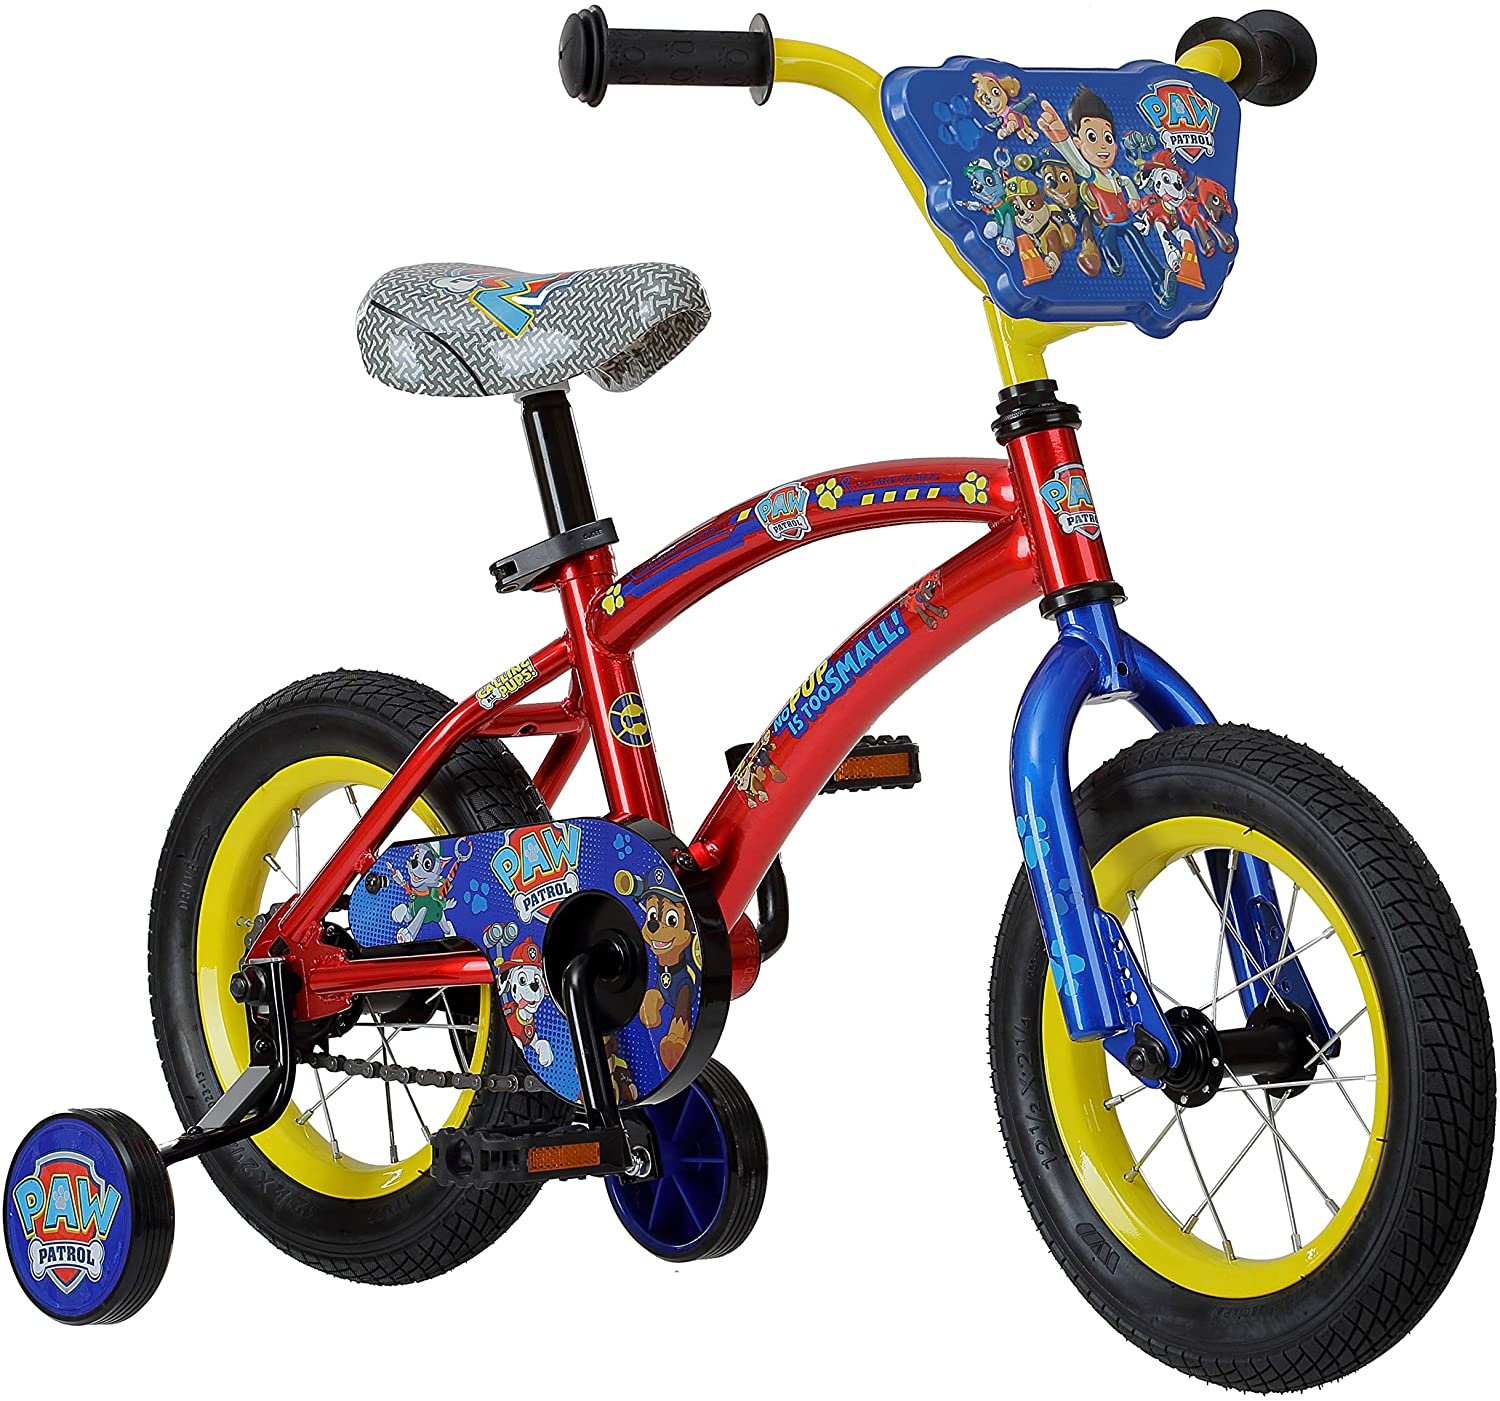 10. Nickelodeon Paw Patrol Bicycle for Kids 